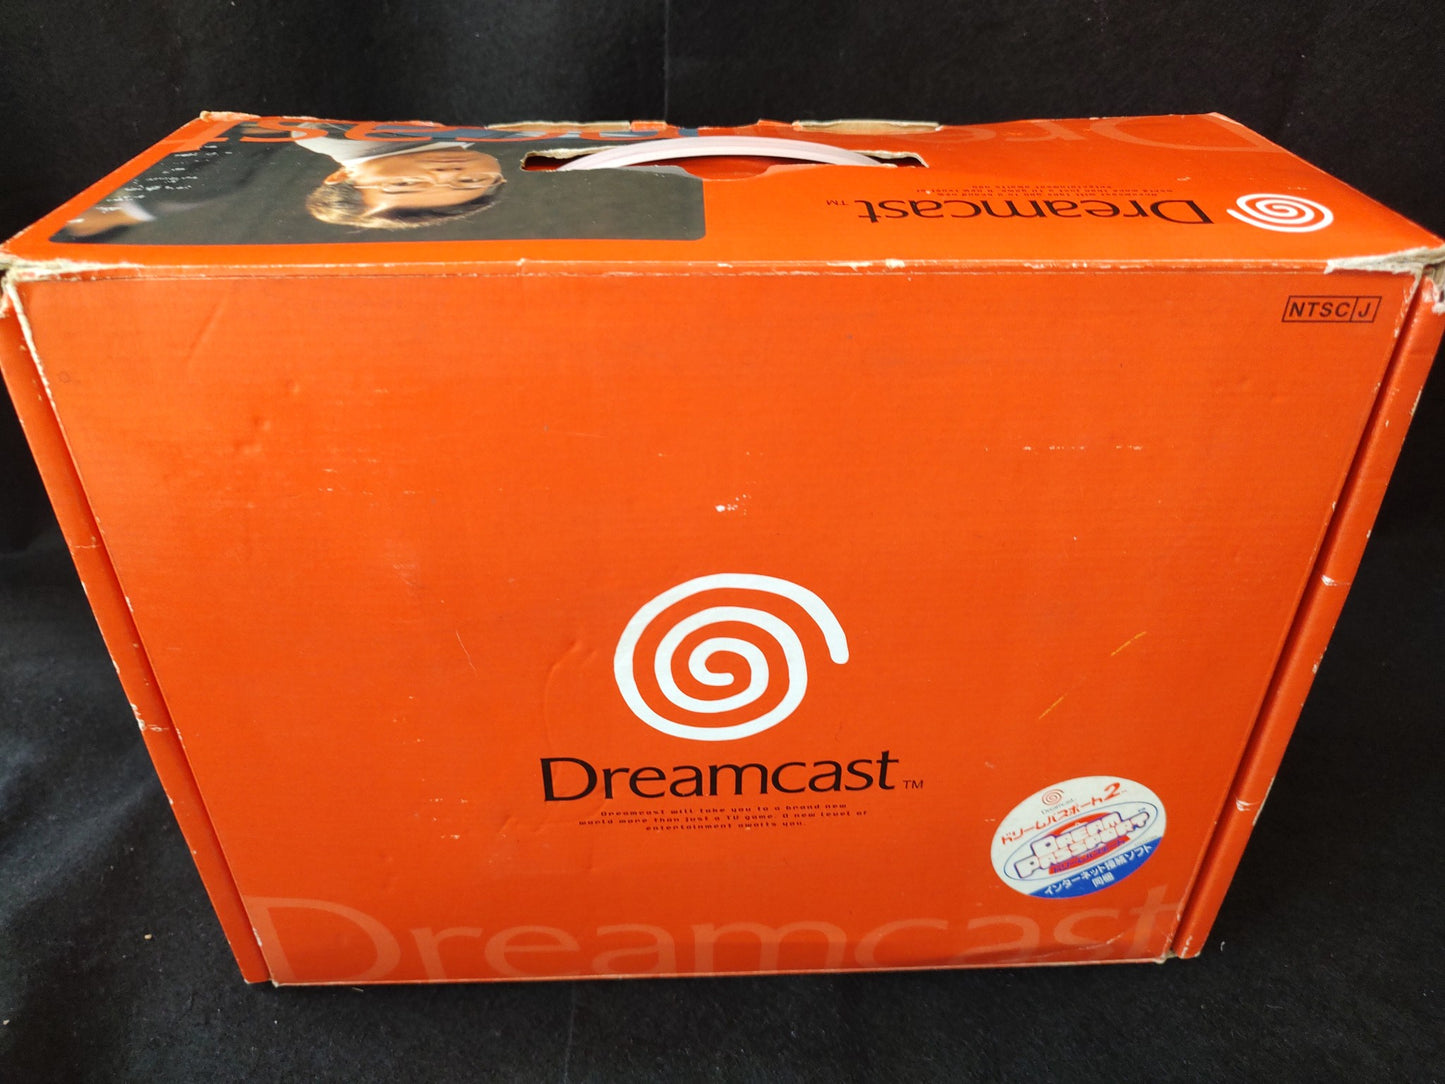 SEGA Dreamcast White Color Console set (HKT-3000), Yukawa Ver Box set -f0914-